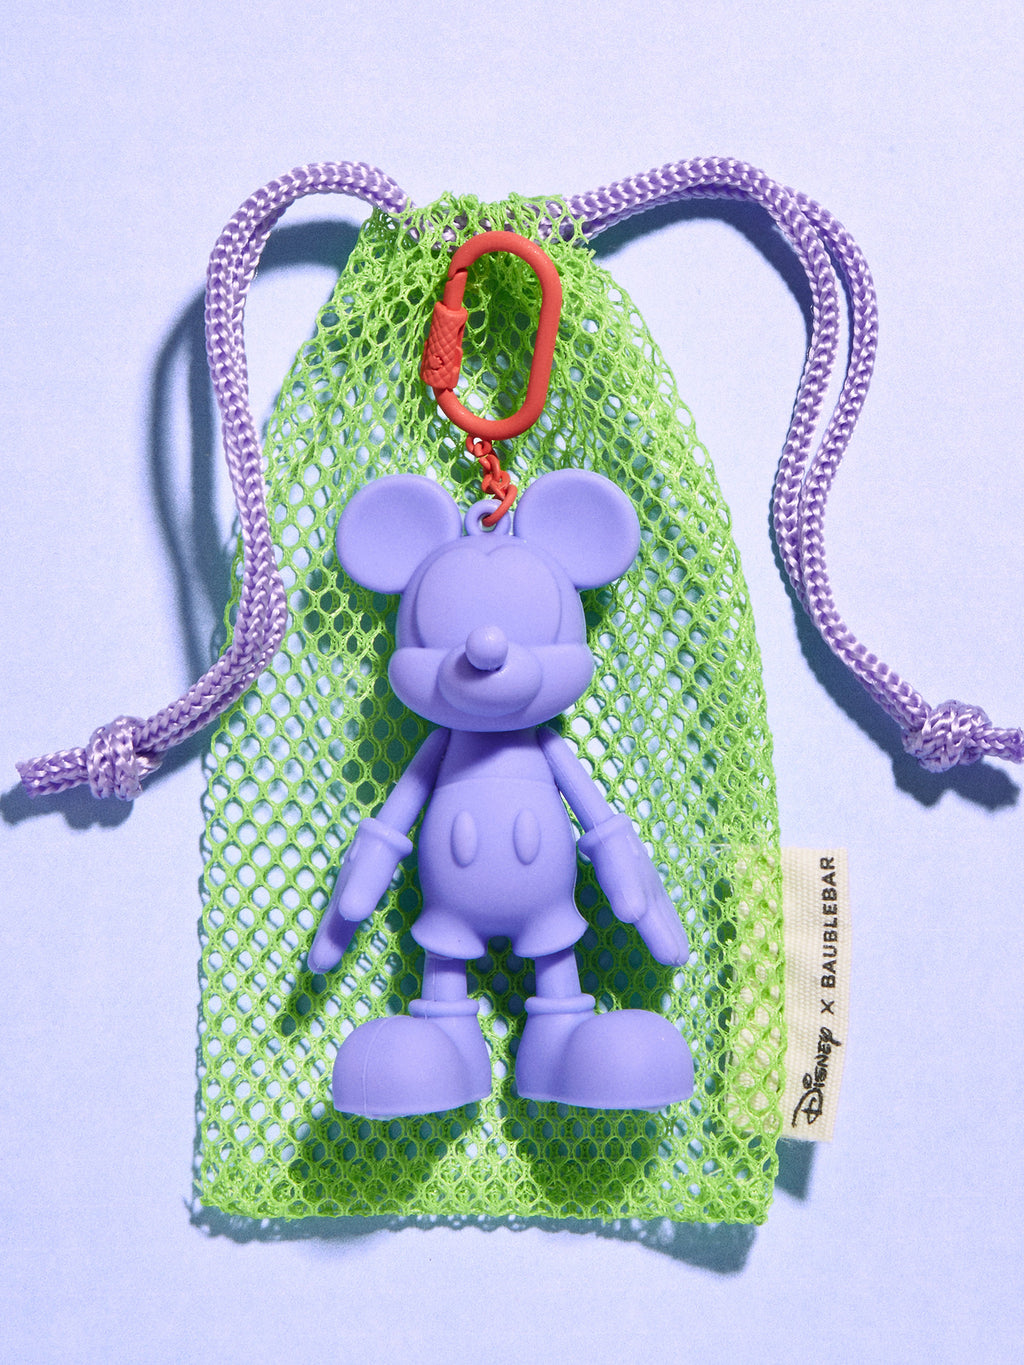 Baublebar Adding to Mickey Mouse Bag Charms Line